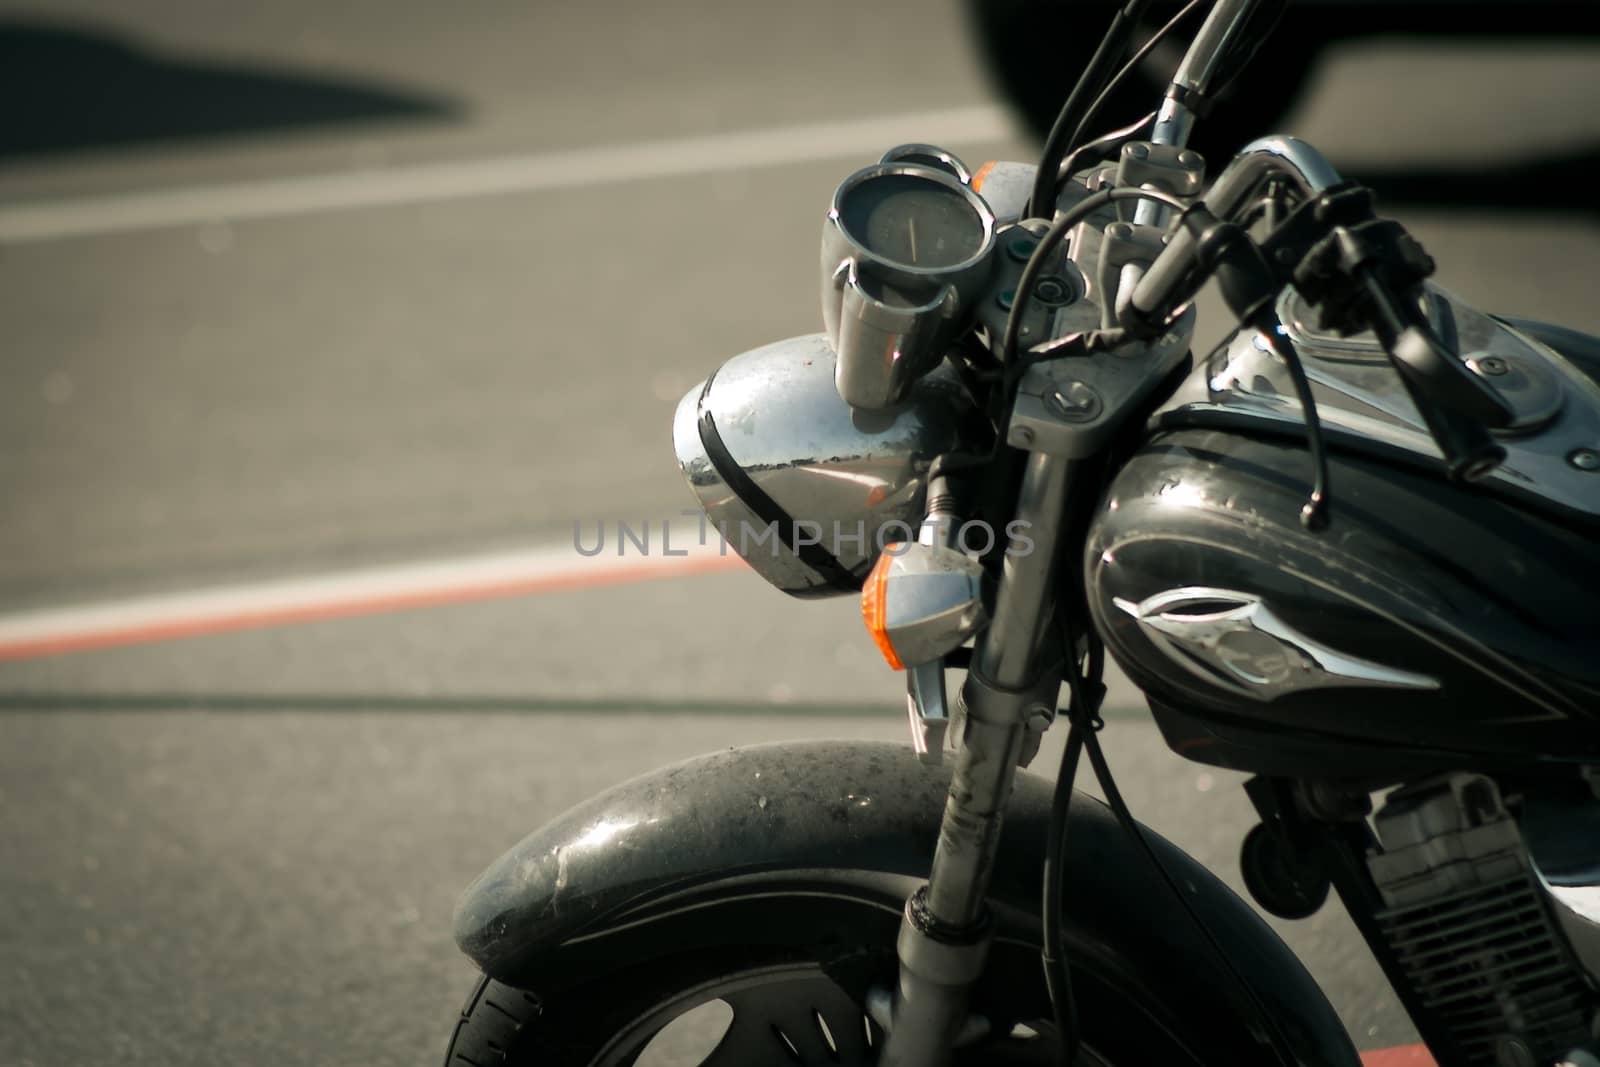 Motorcycle by gigiobbr